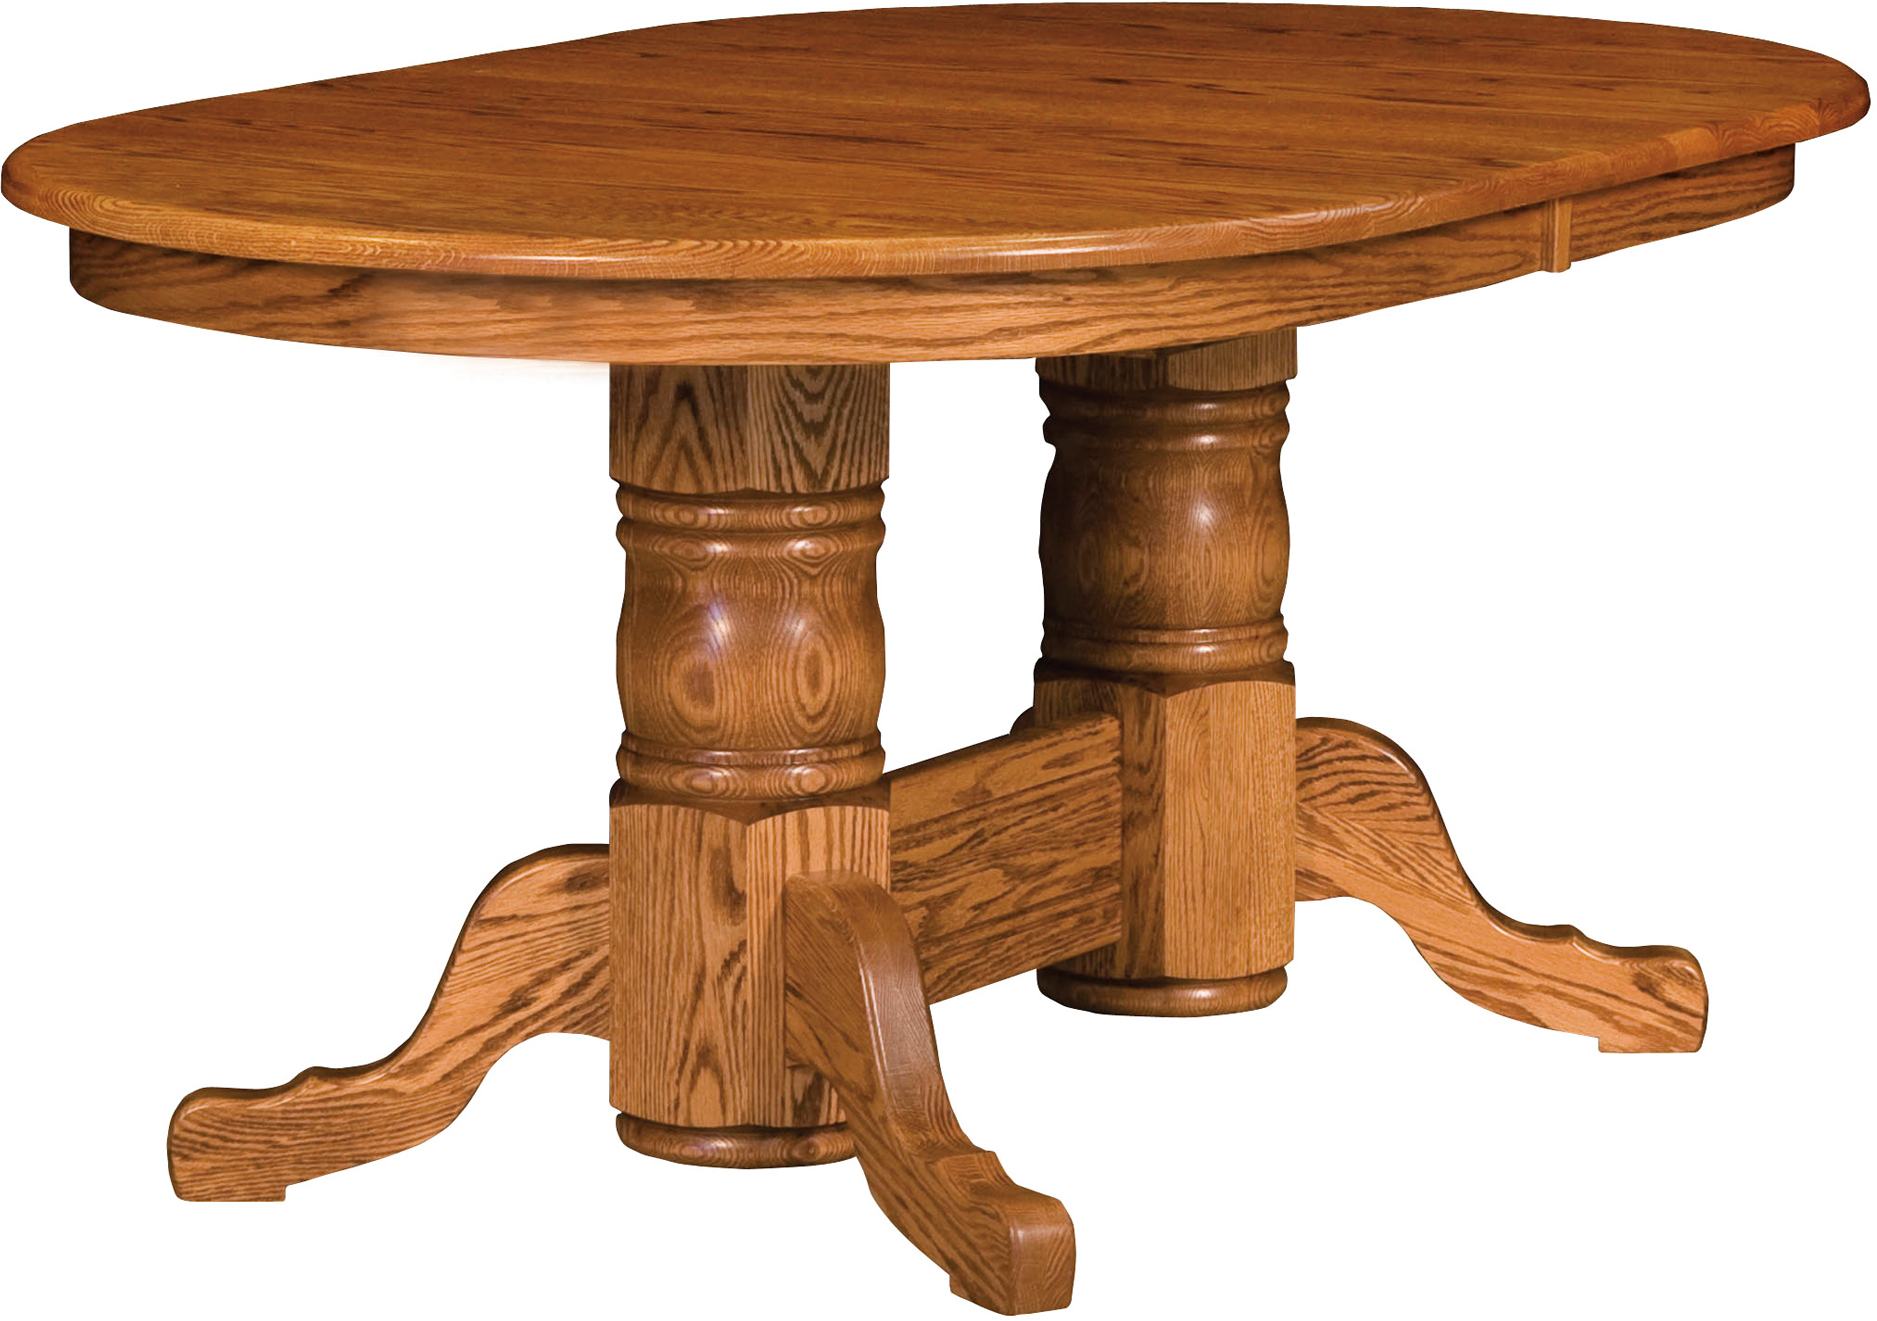 The Farmhouse Oak Double Pedestal Dining Room Table